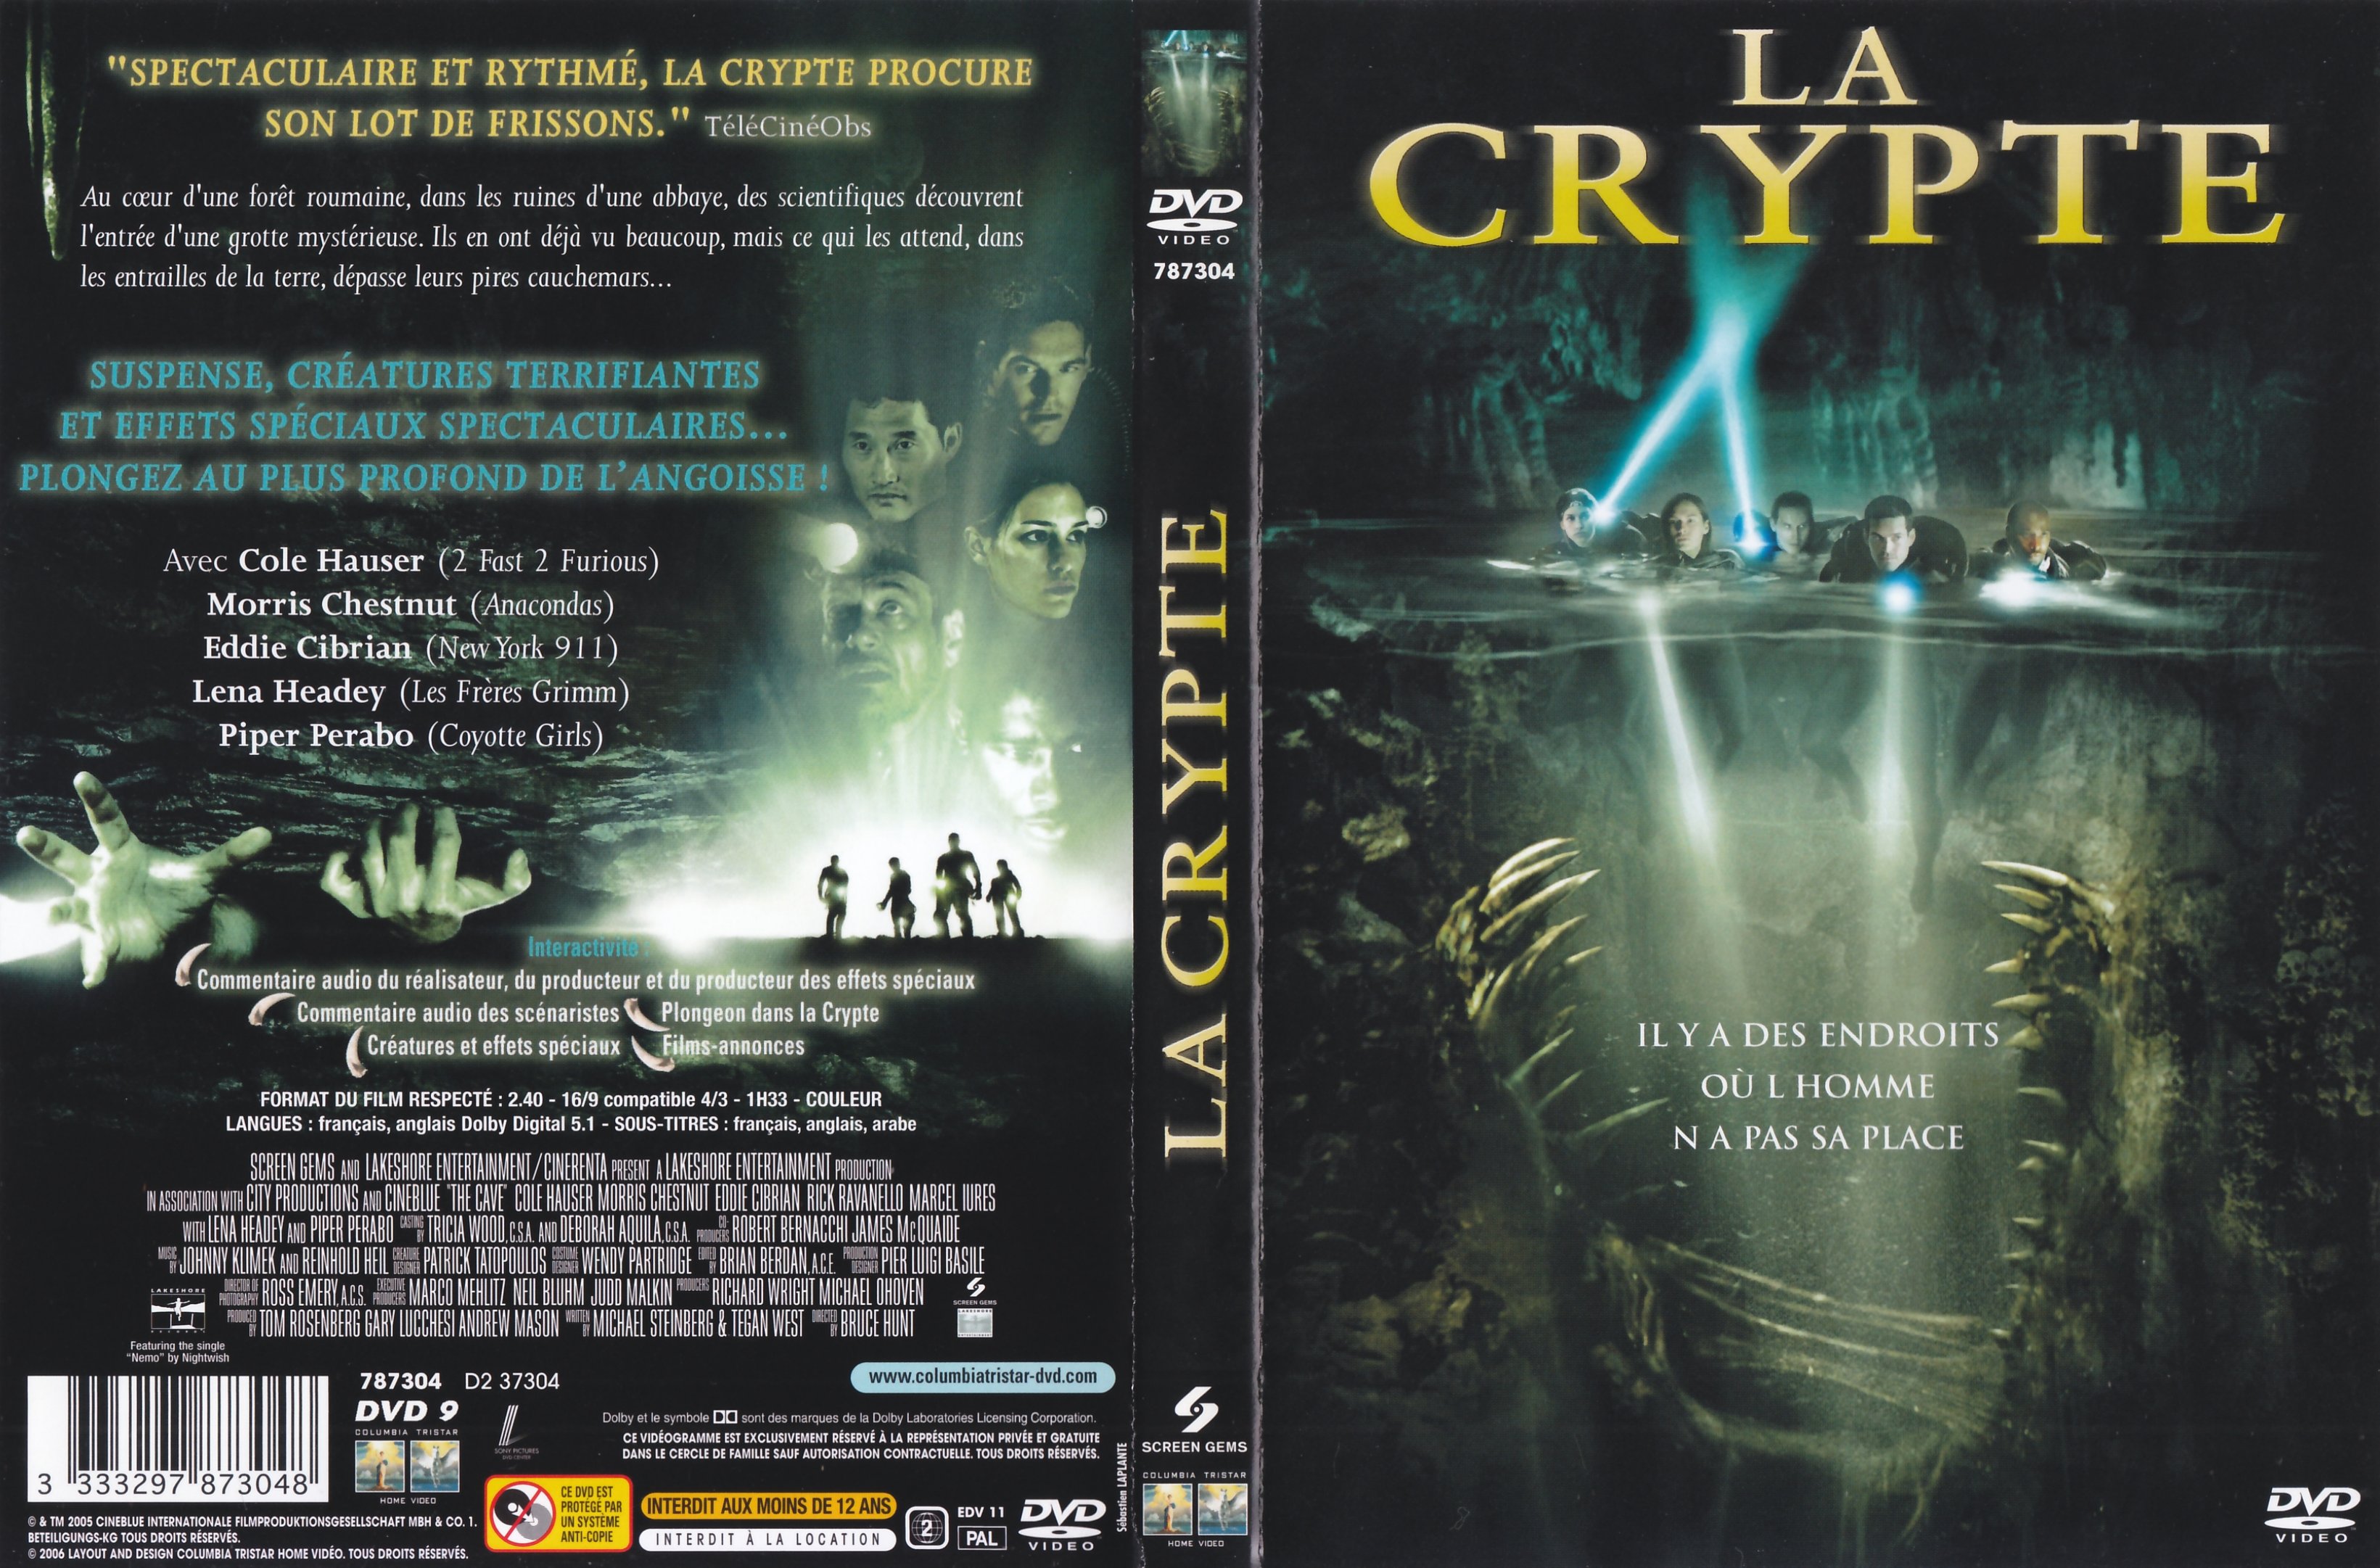 Jaquette DVD La Crypte v3